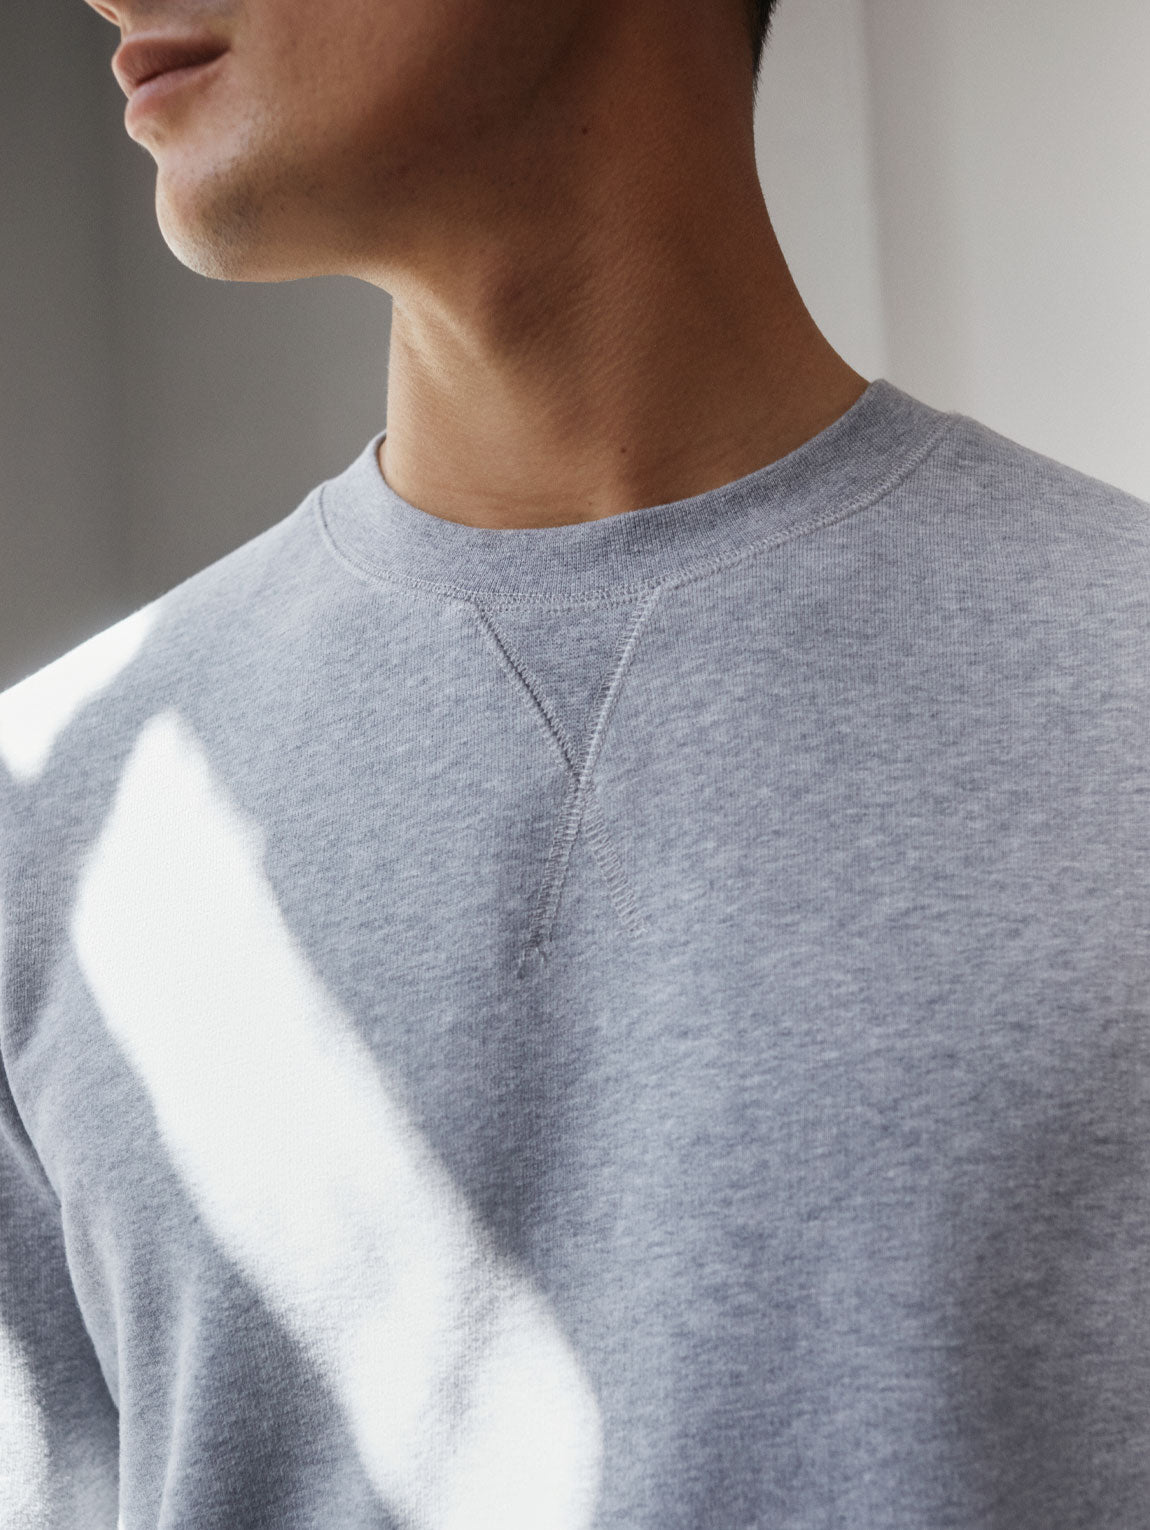 Men's Loopback Sweatshirt in Grey Melange | Sunspel